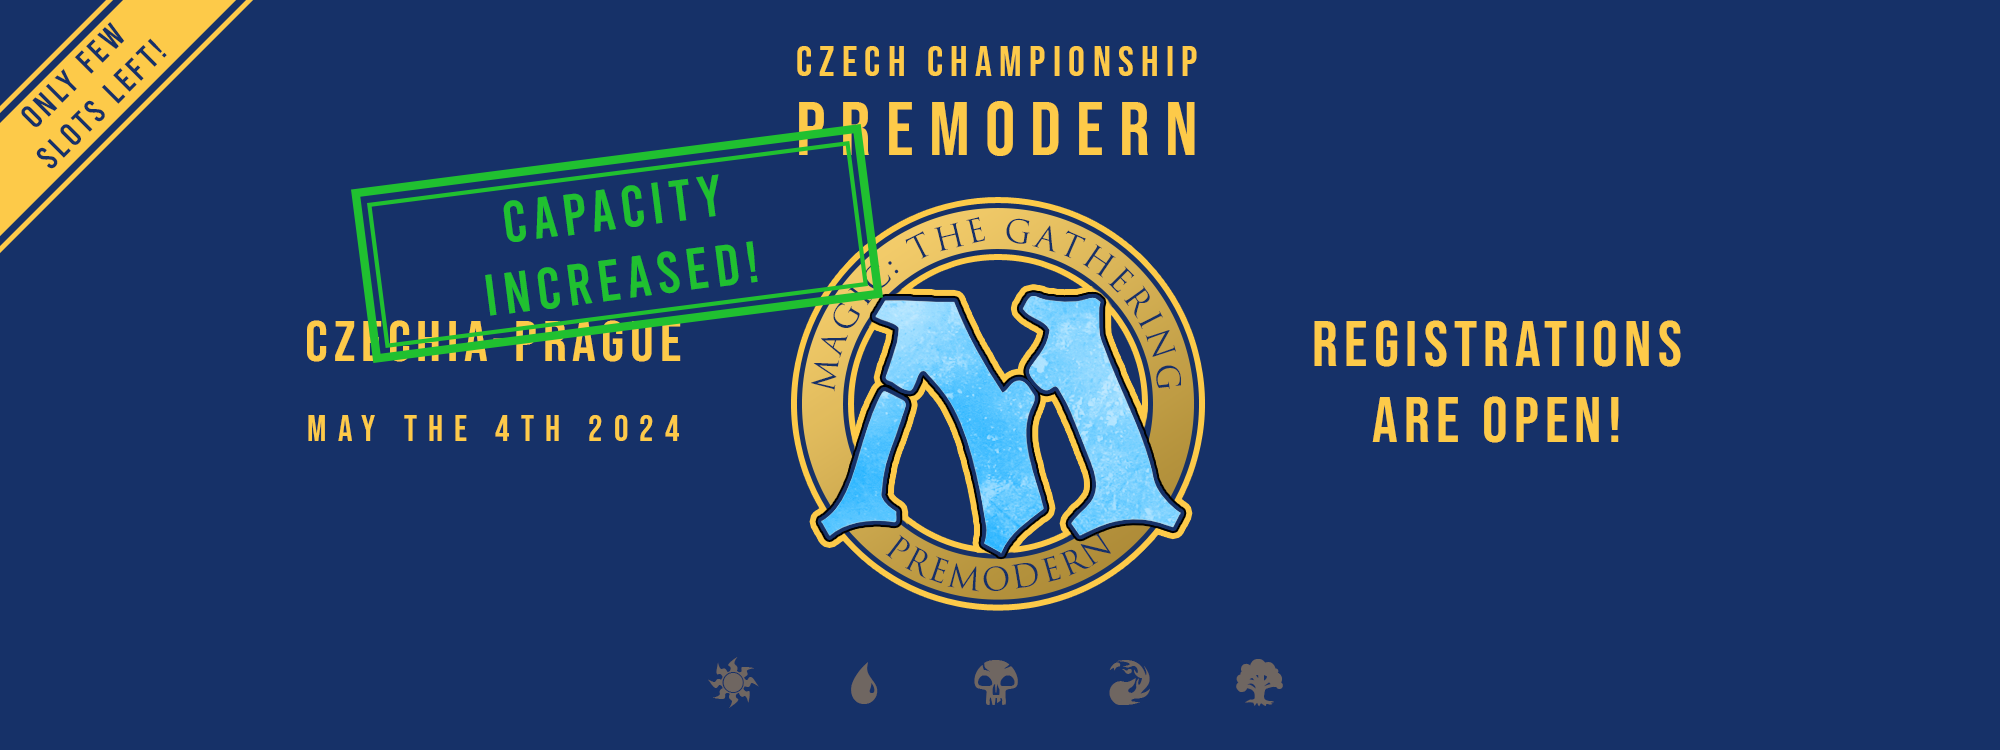 Czech Premodern Championship 2024